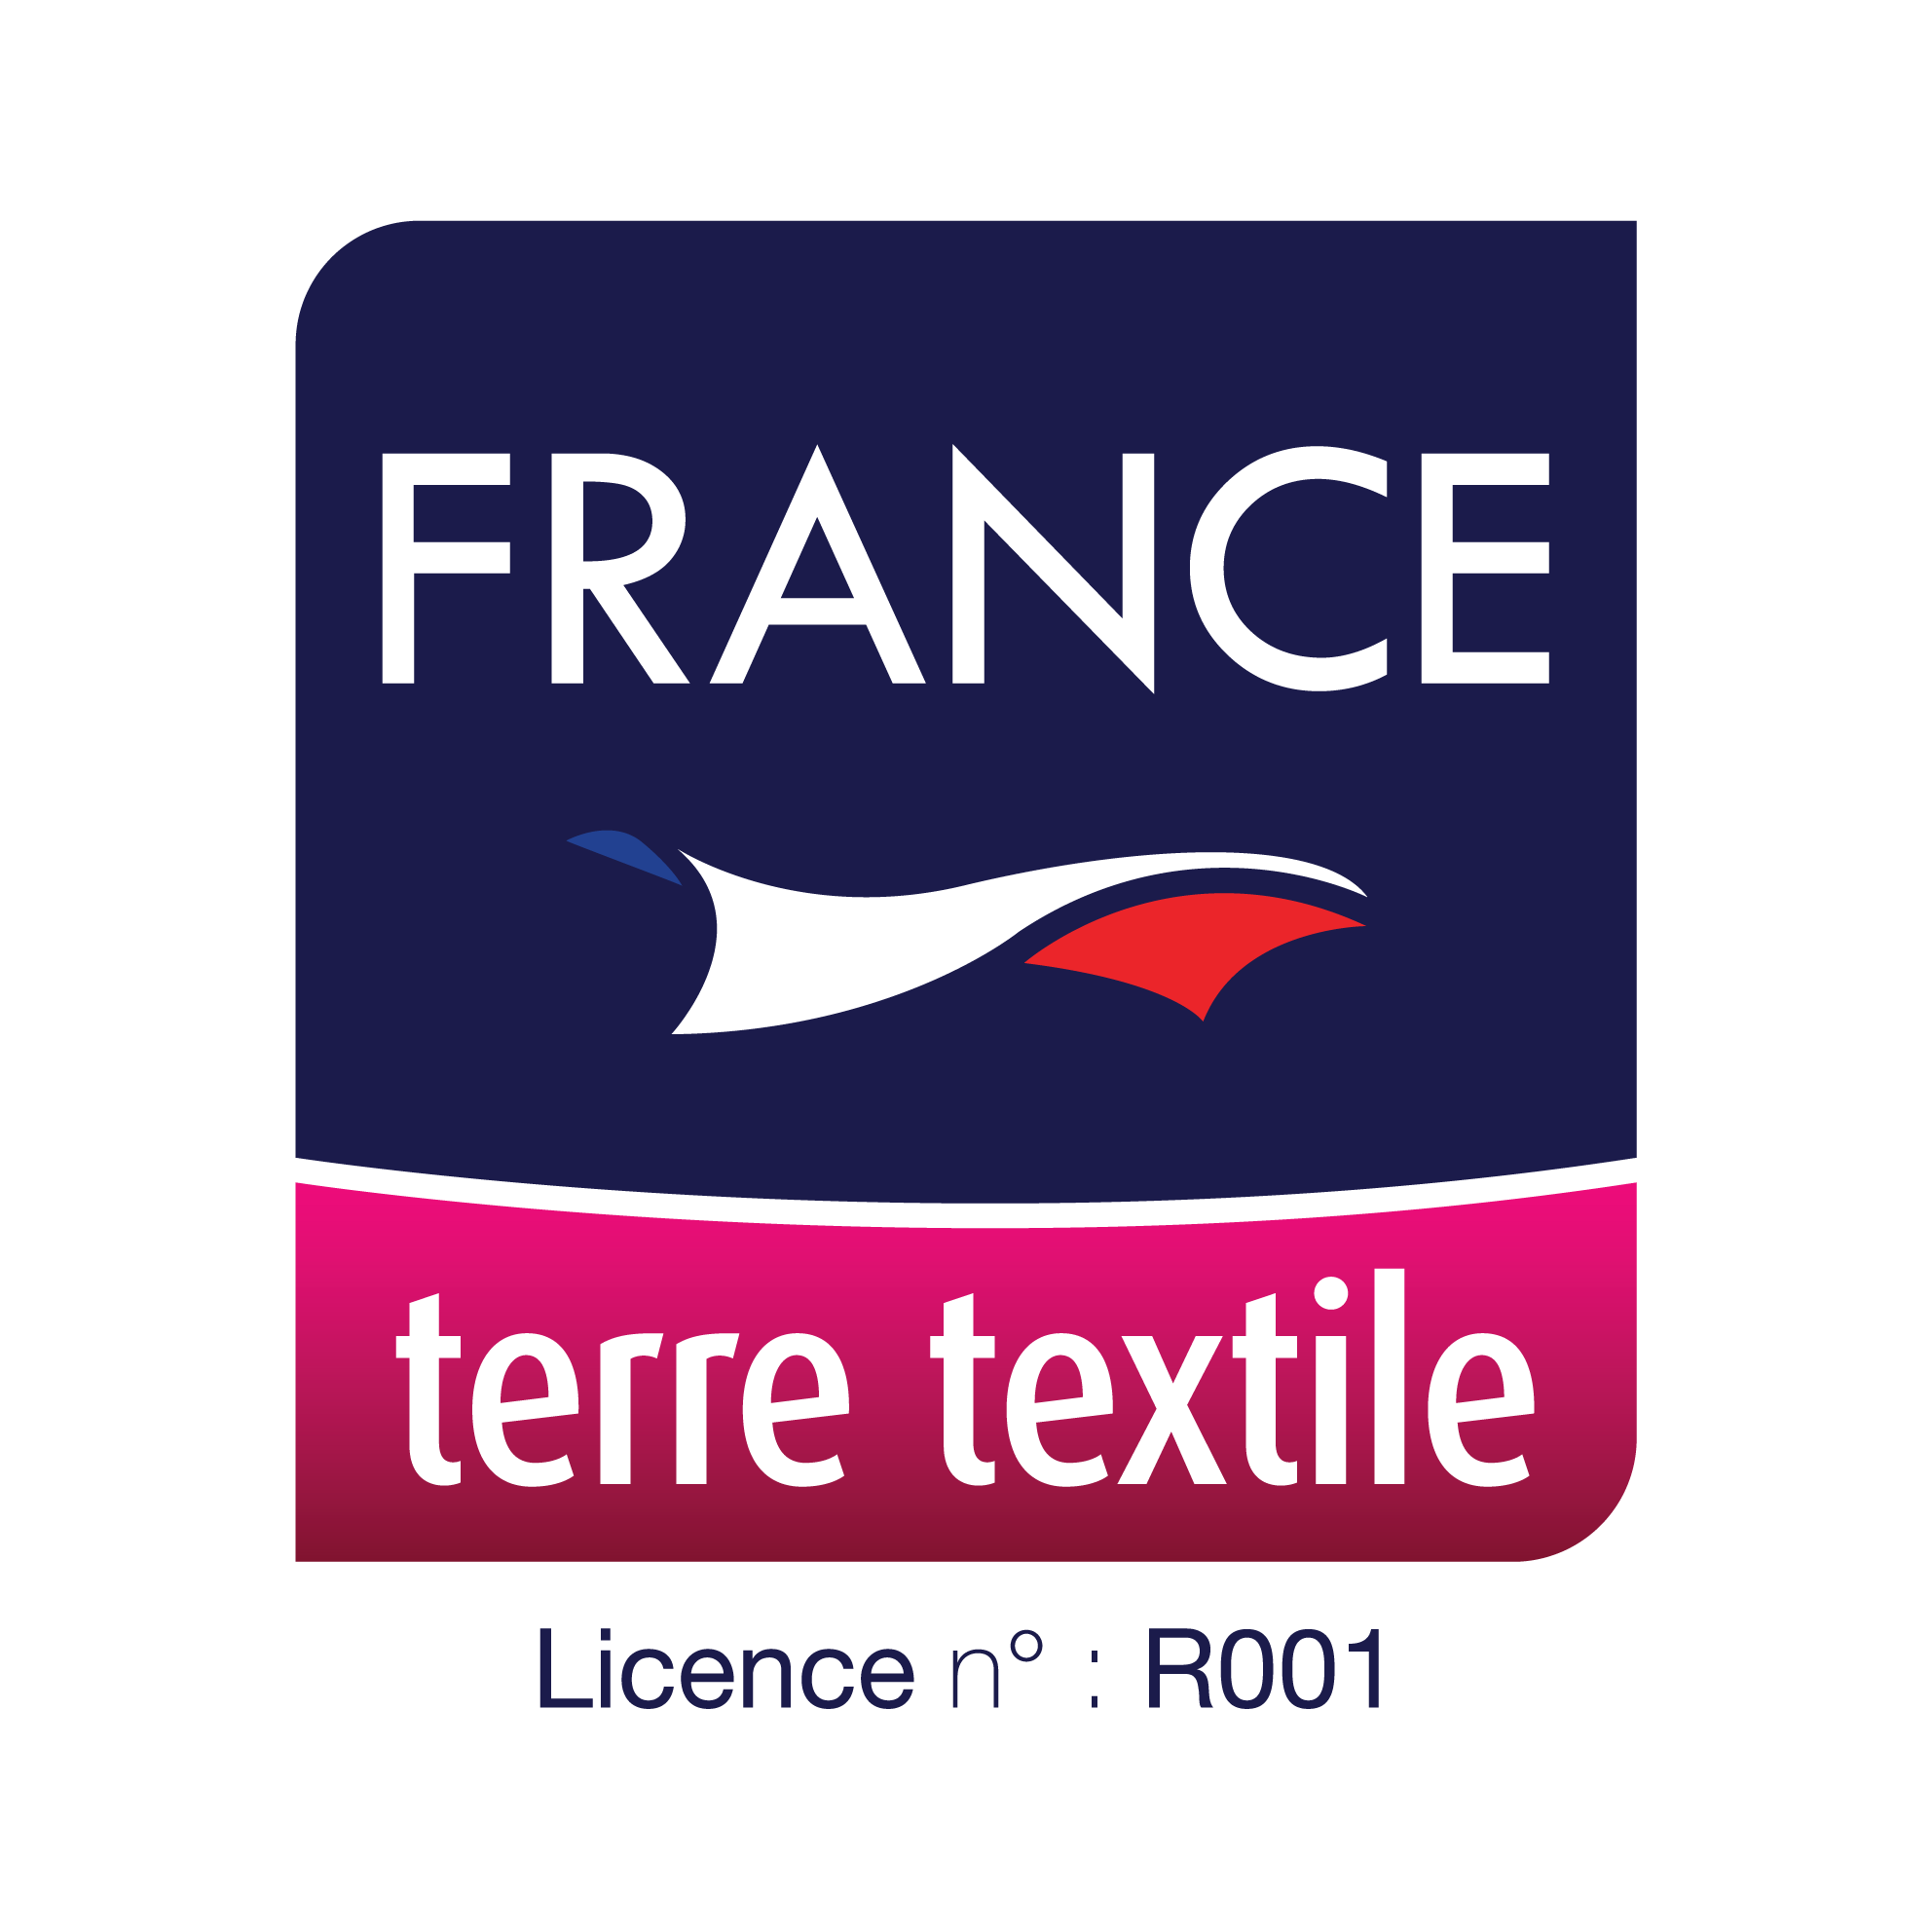 France terre textile